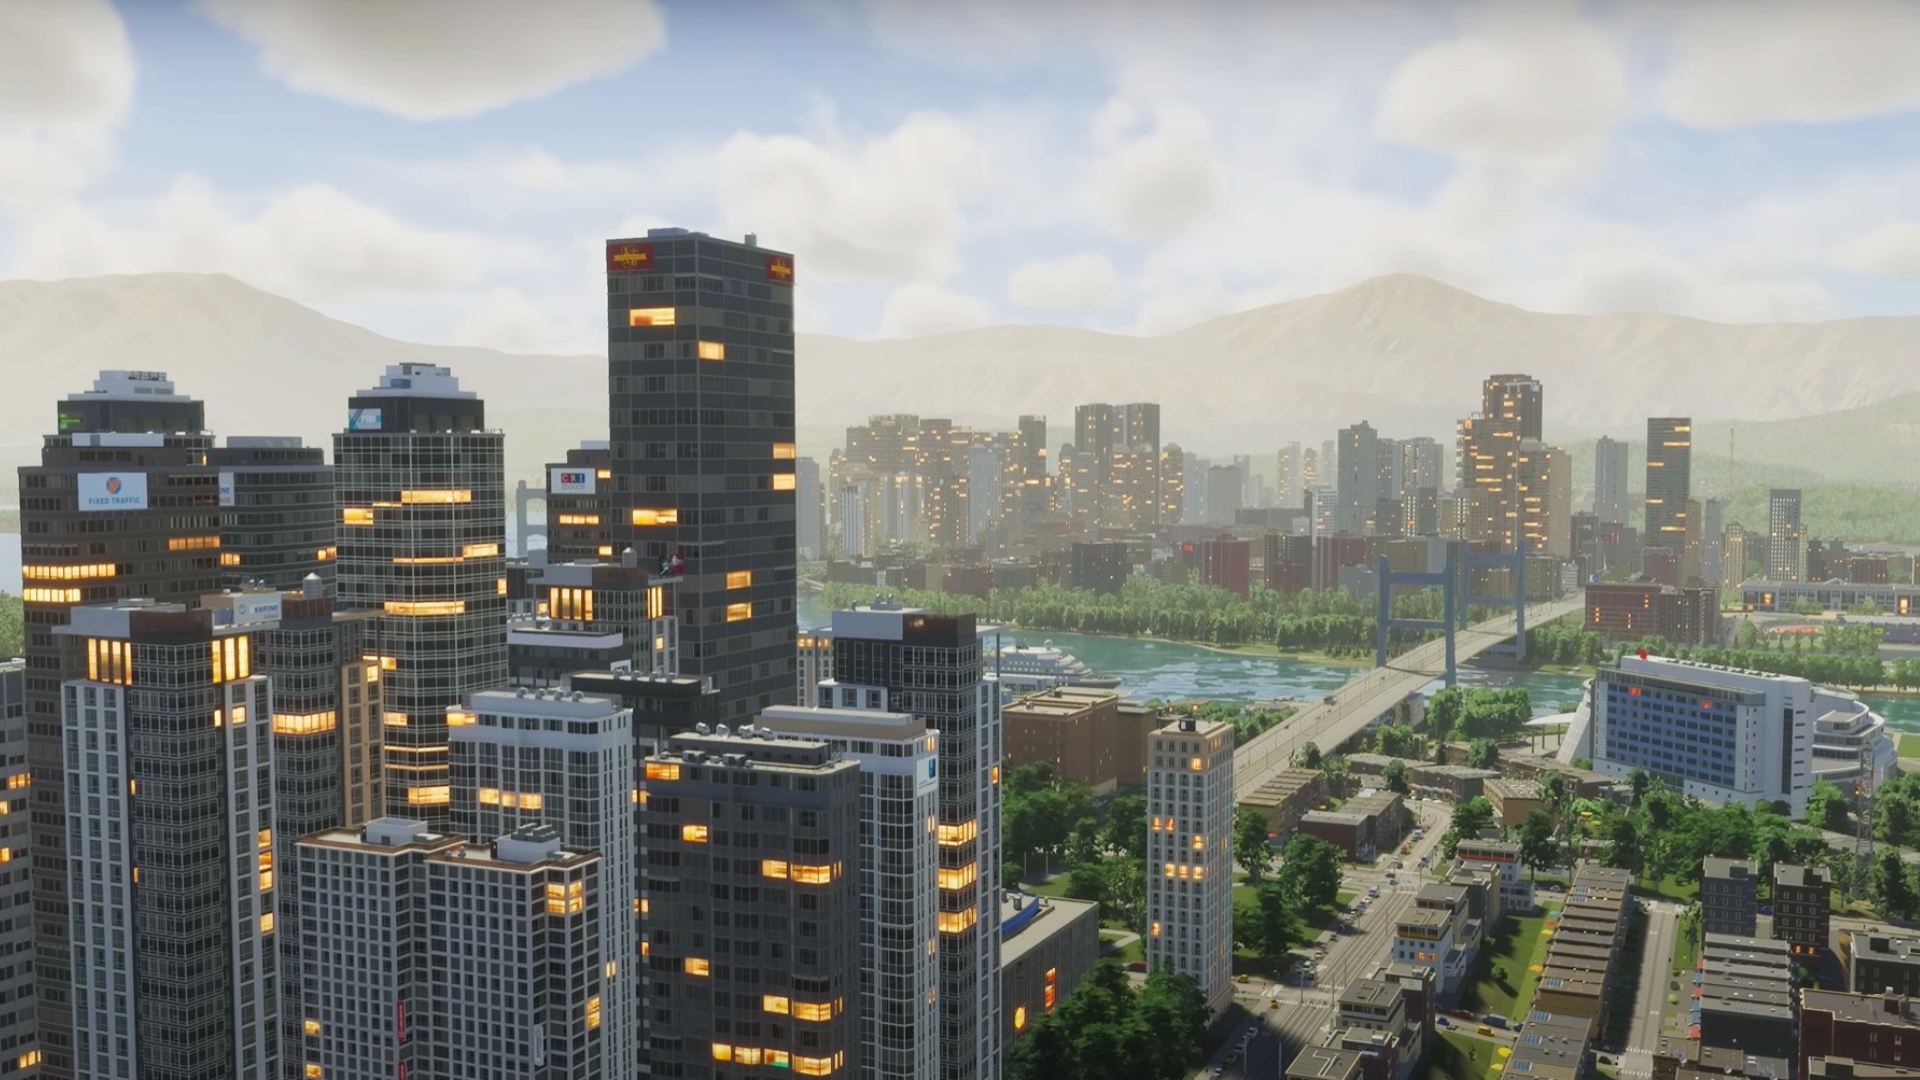 Cities Skylines 2 Mods